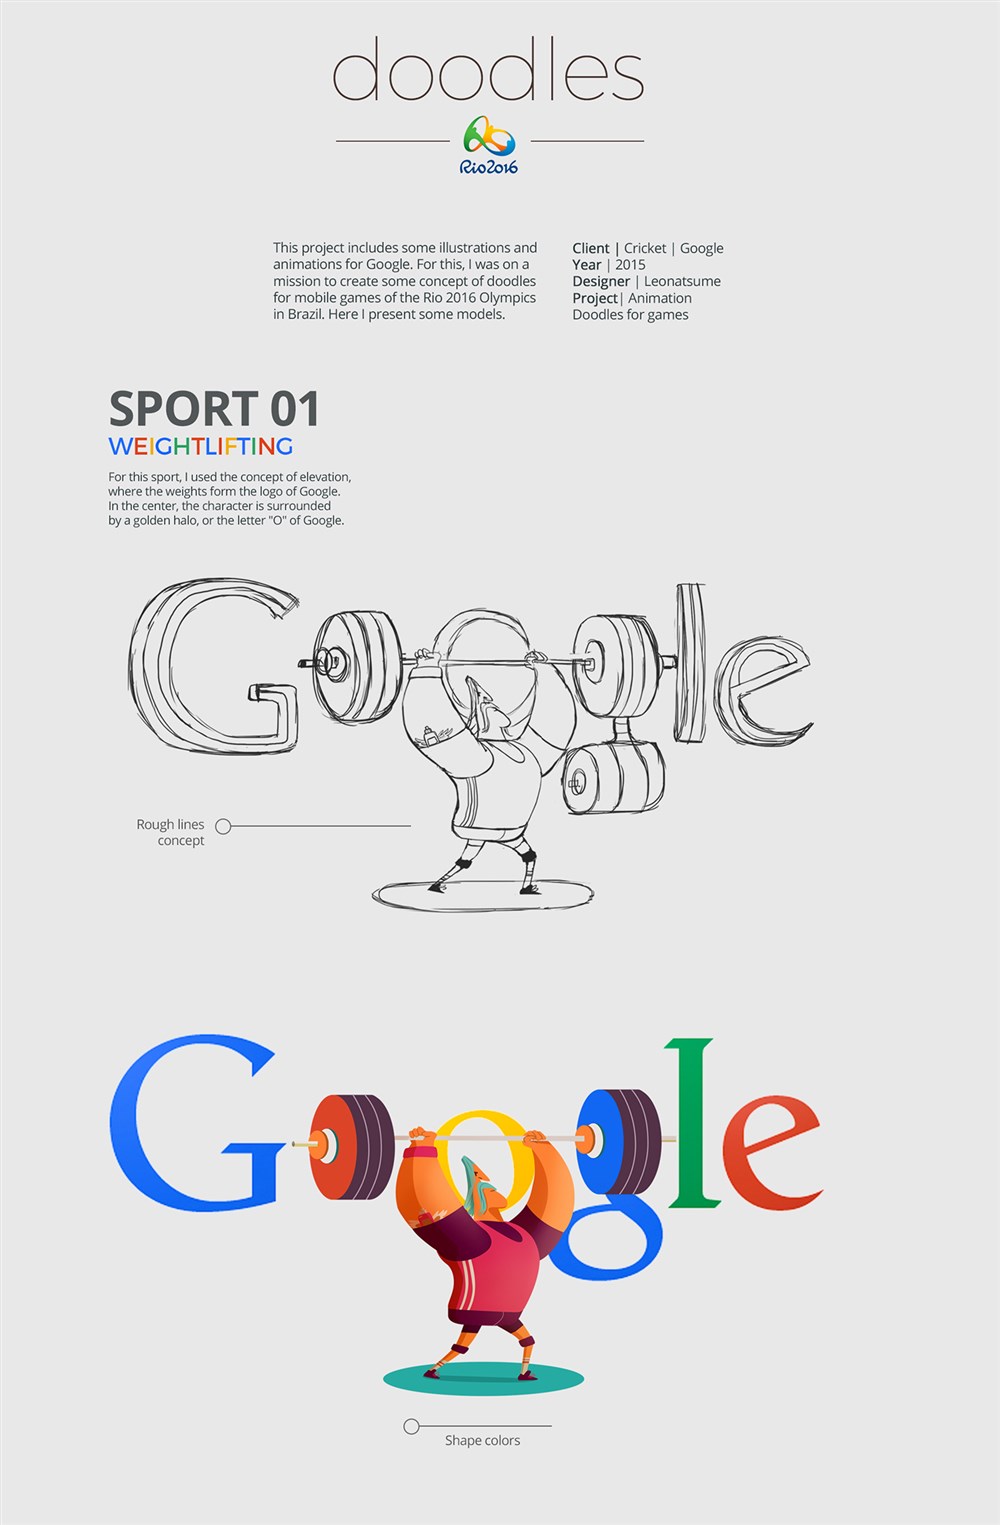 google为2016年奥林匹克运动会会定制的一款游戏